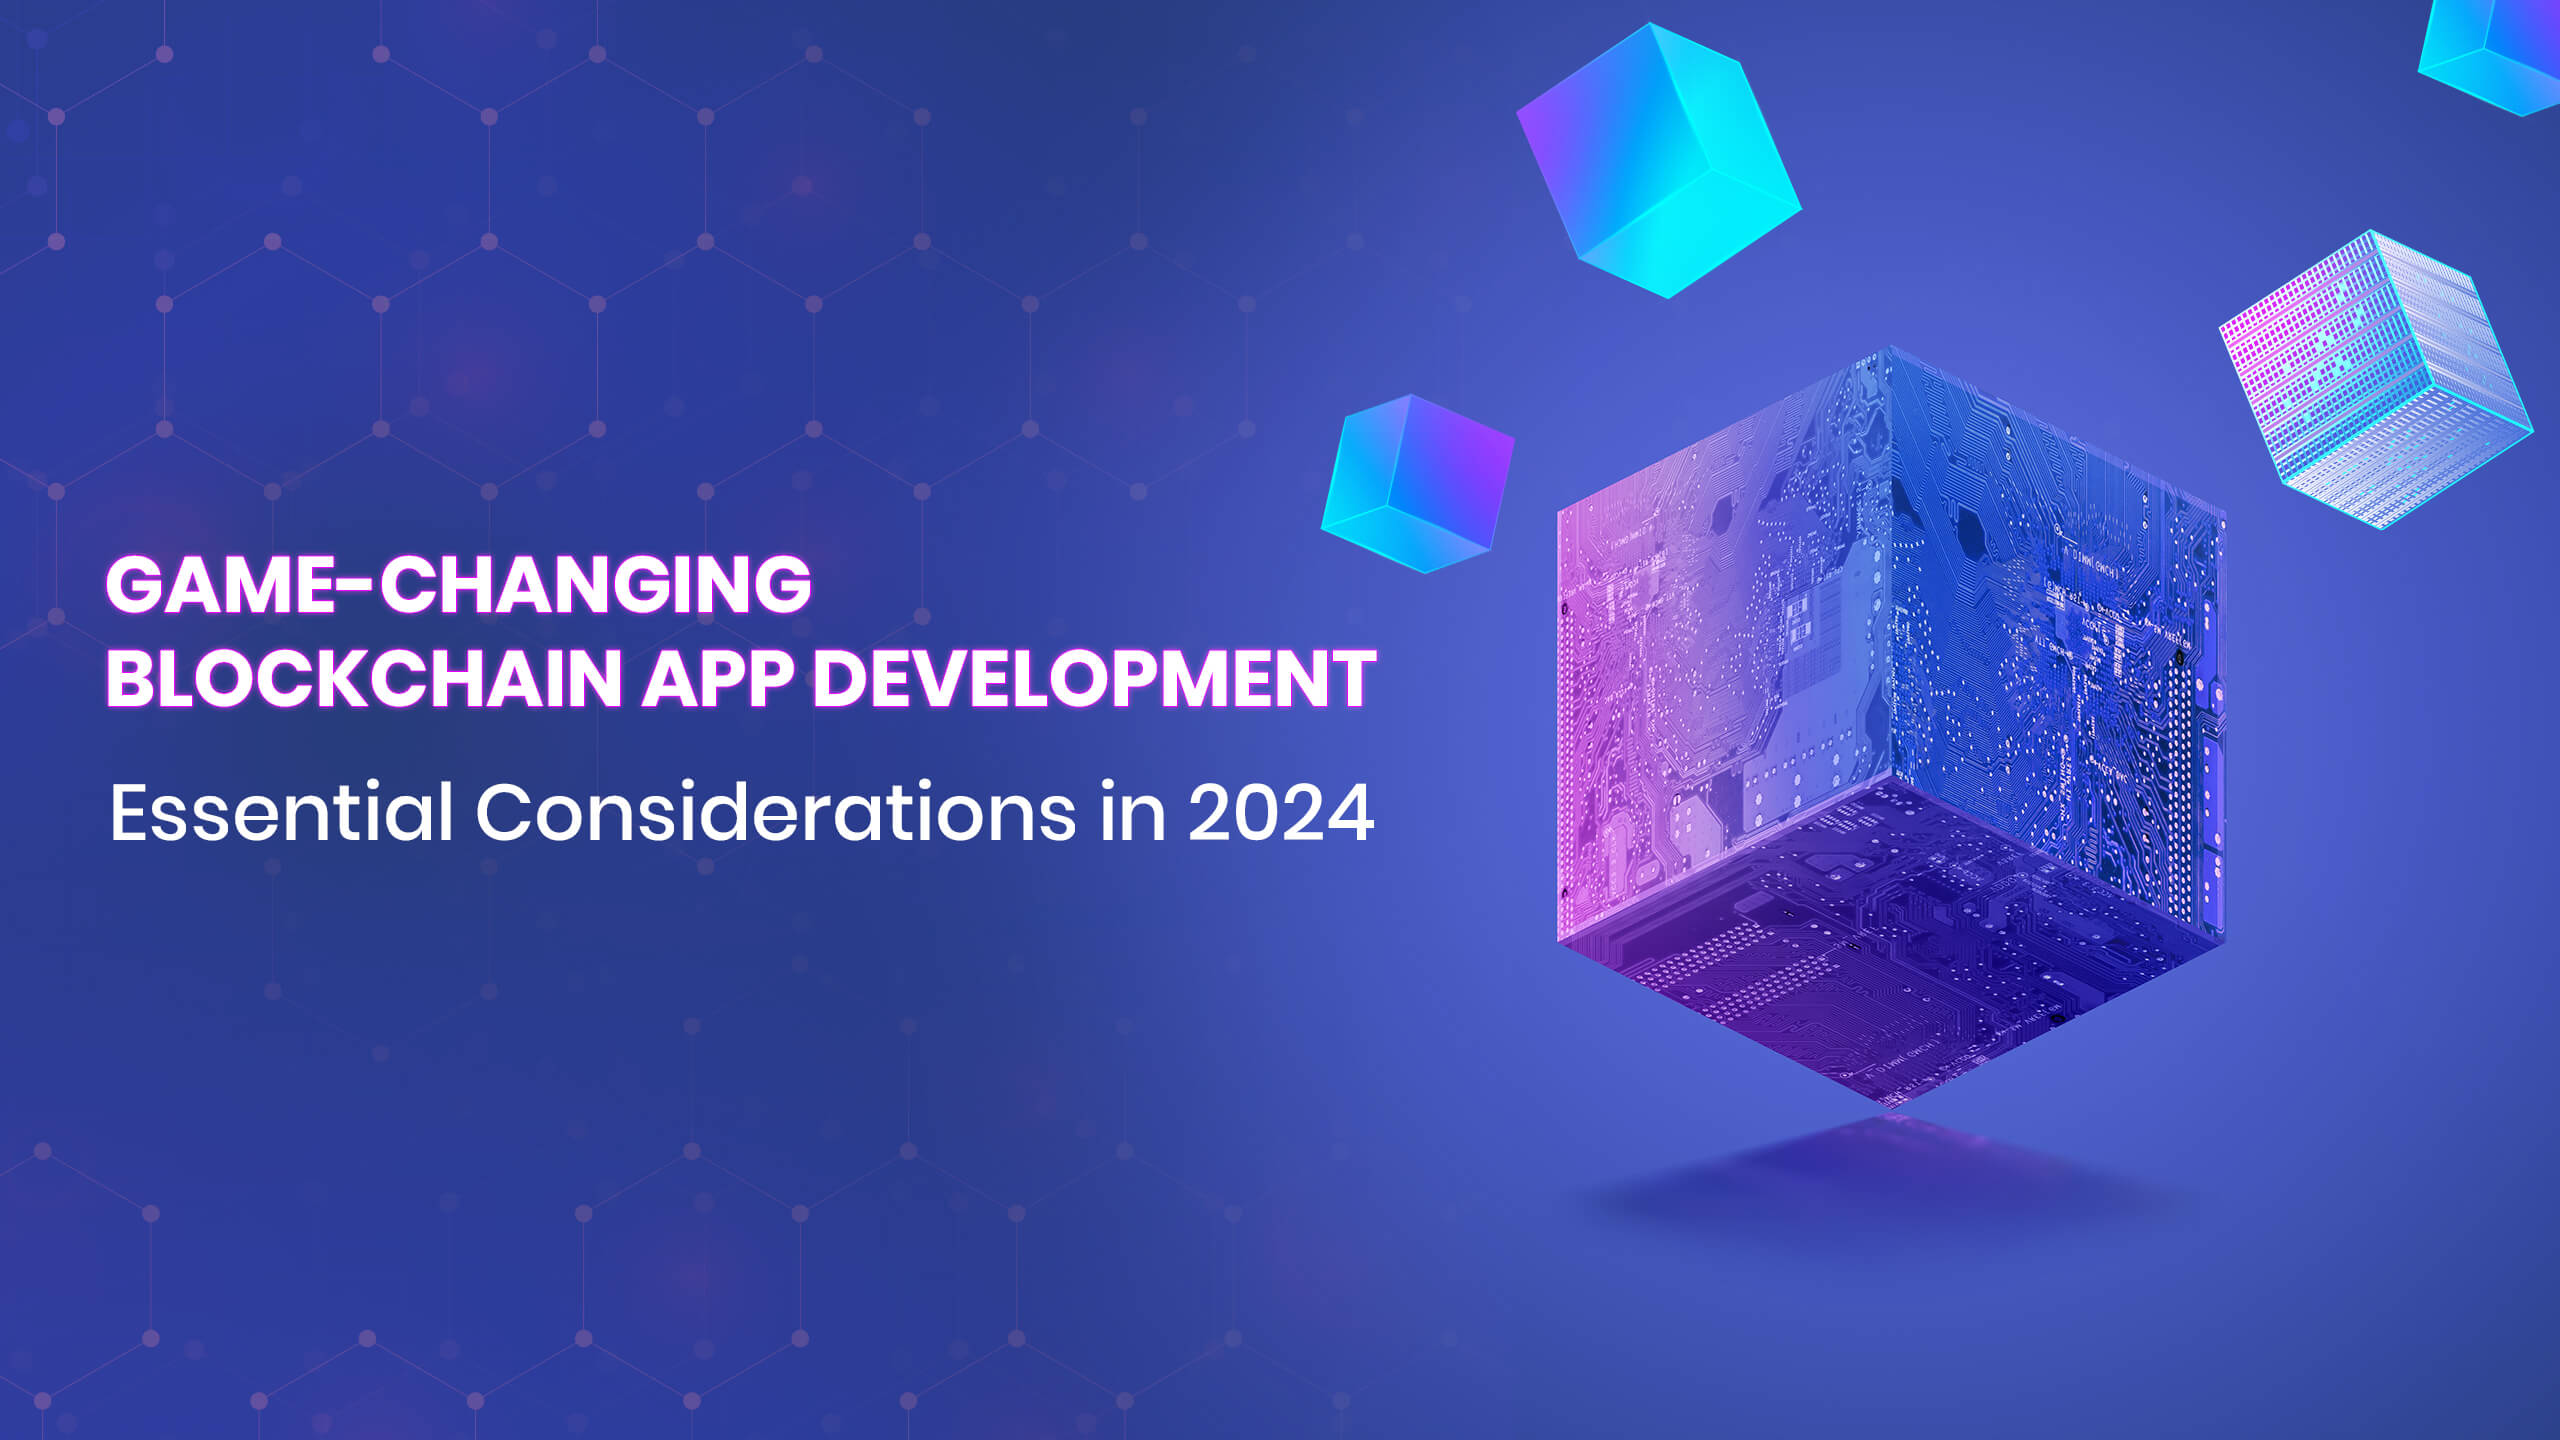 Blockchain App Development Considerations in 2024